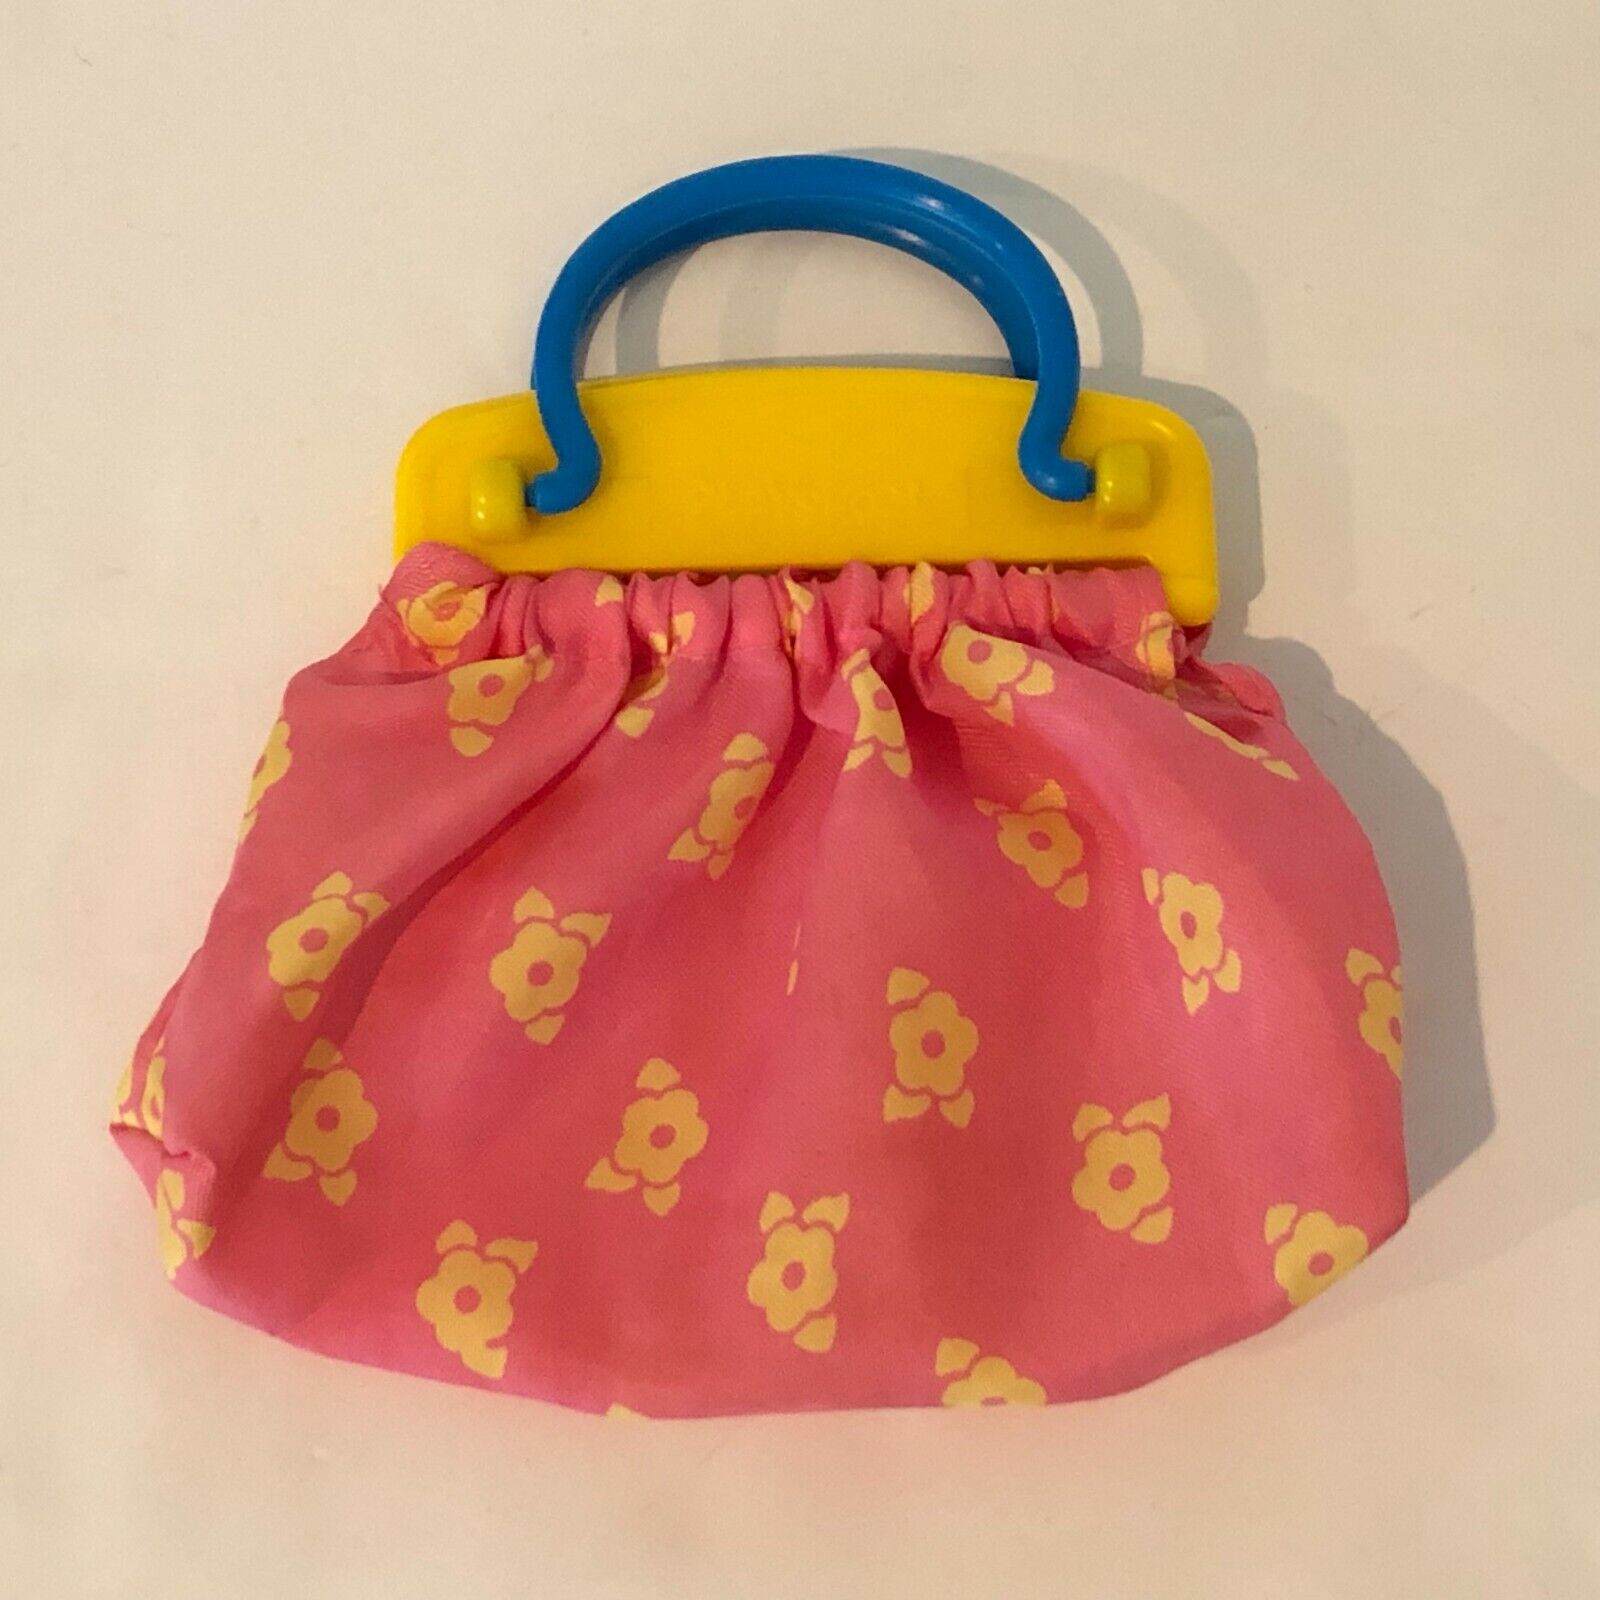 Playskool Vintage Pretend Play Purse Handbag 1989 Pink Yellow ...